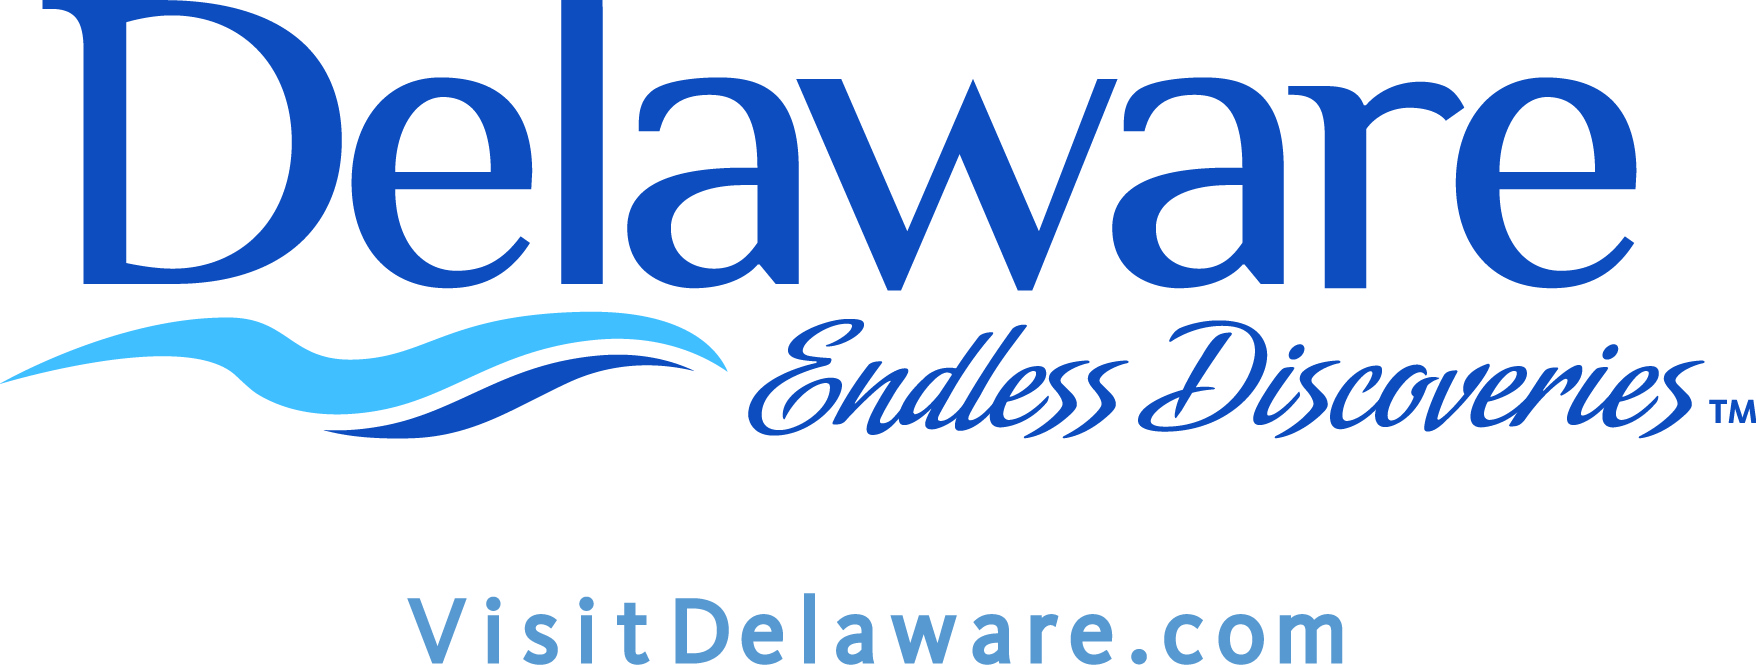 Delaware Tourism Office